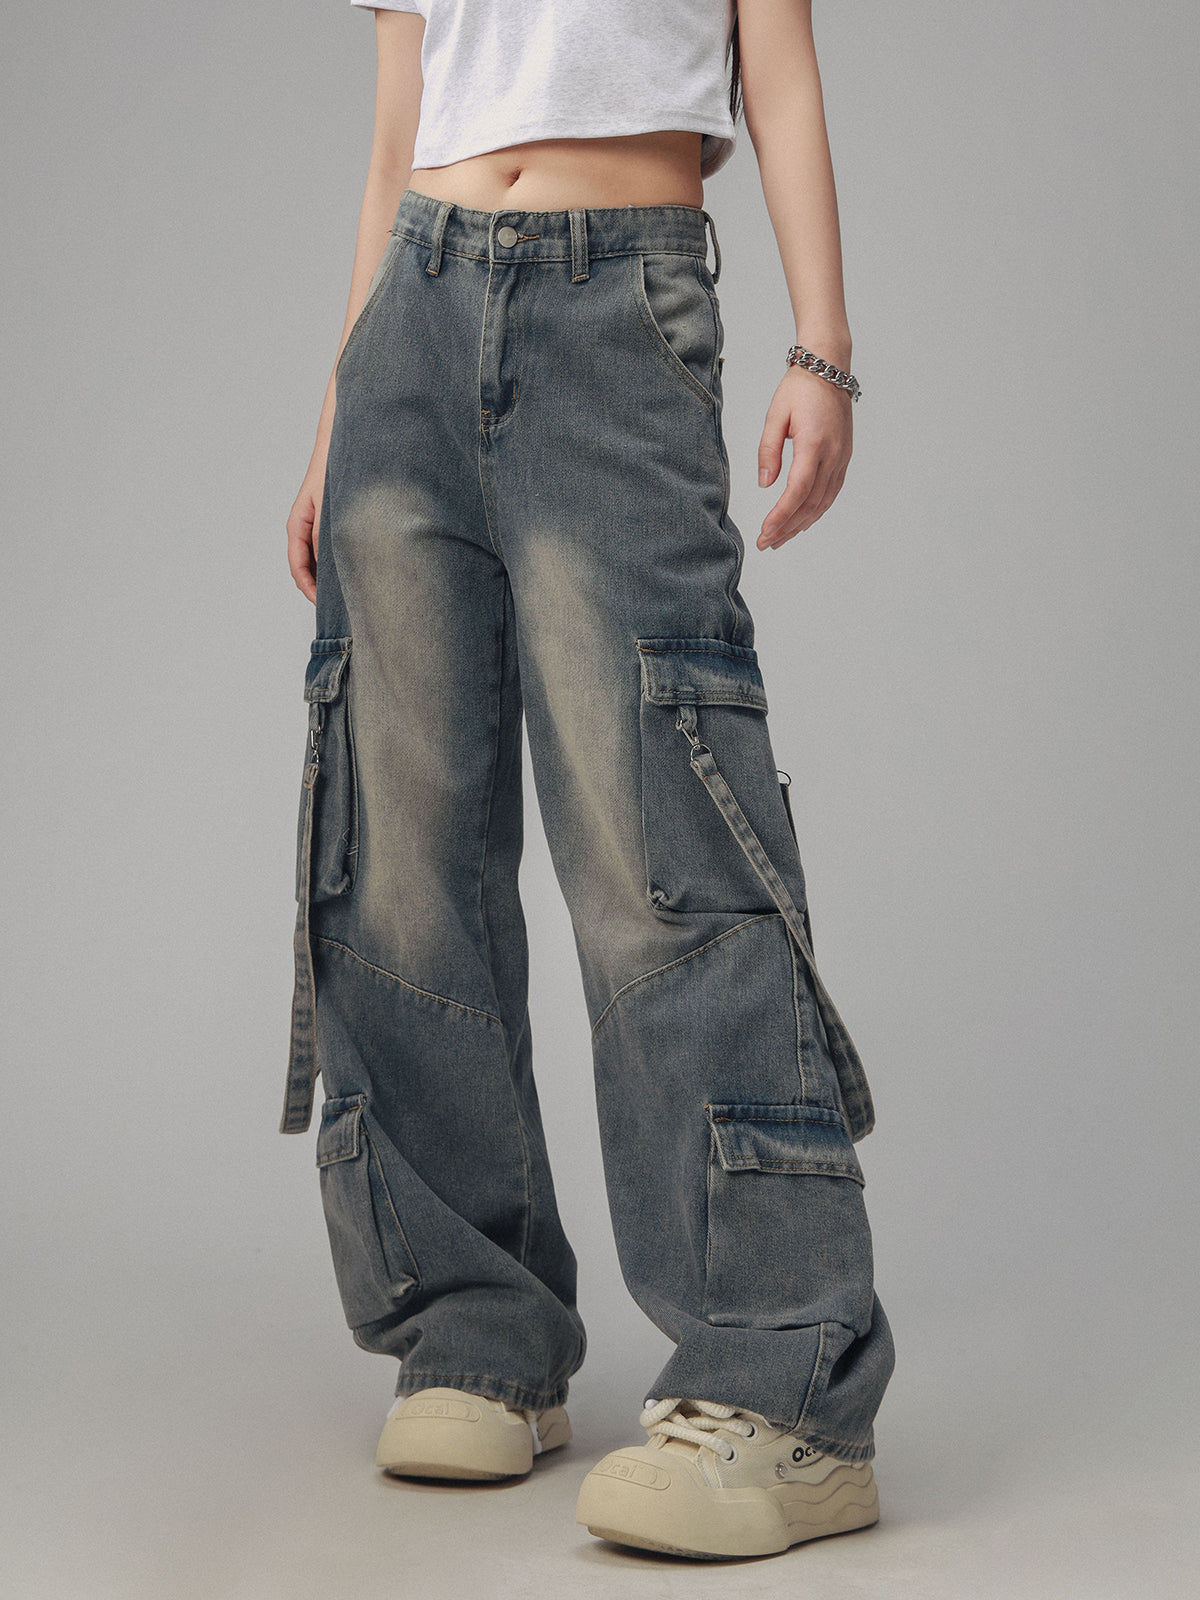 Retro Loose Distressed Jeans